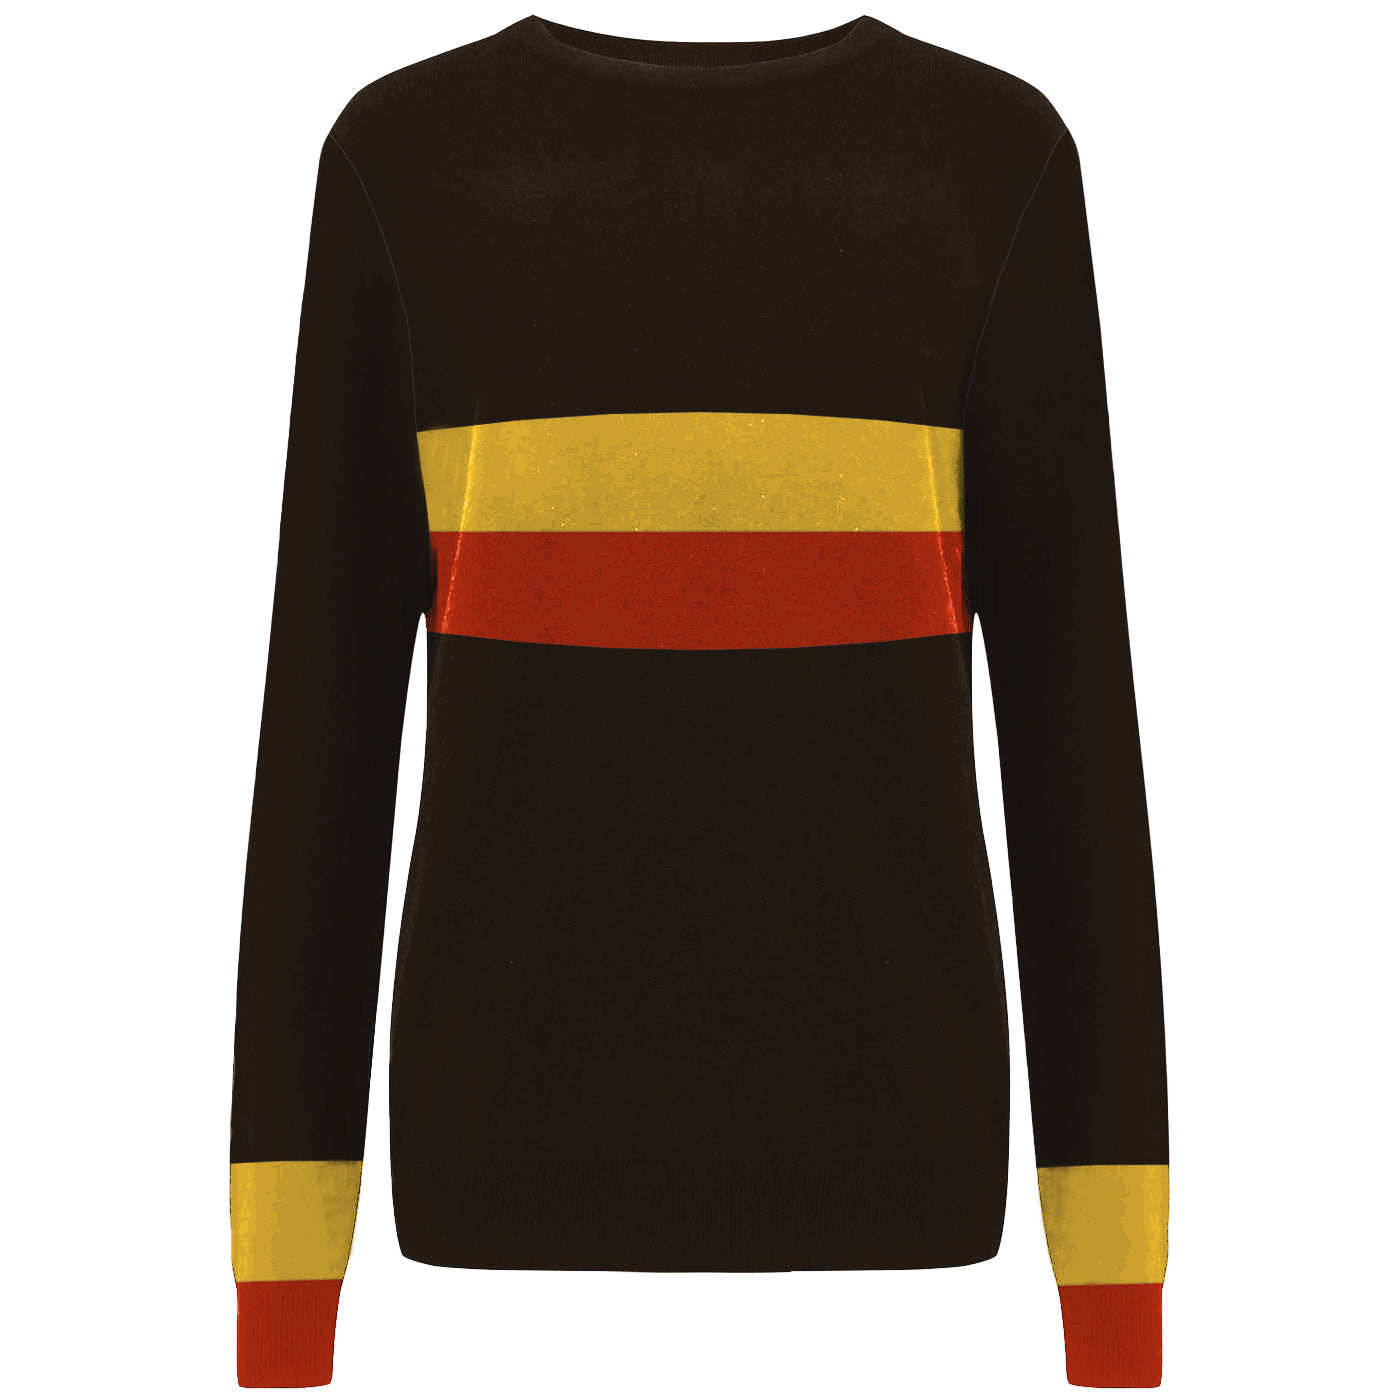 Femmes 1960s Retro Knitwear Manches Longues Orange & Rouge Poitrine Stripe T-shirts